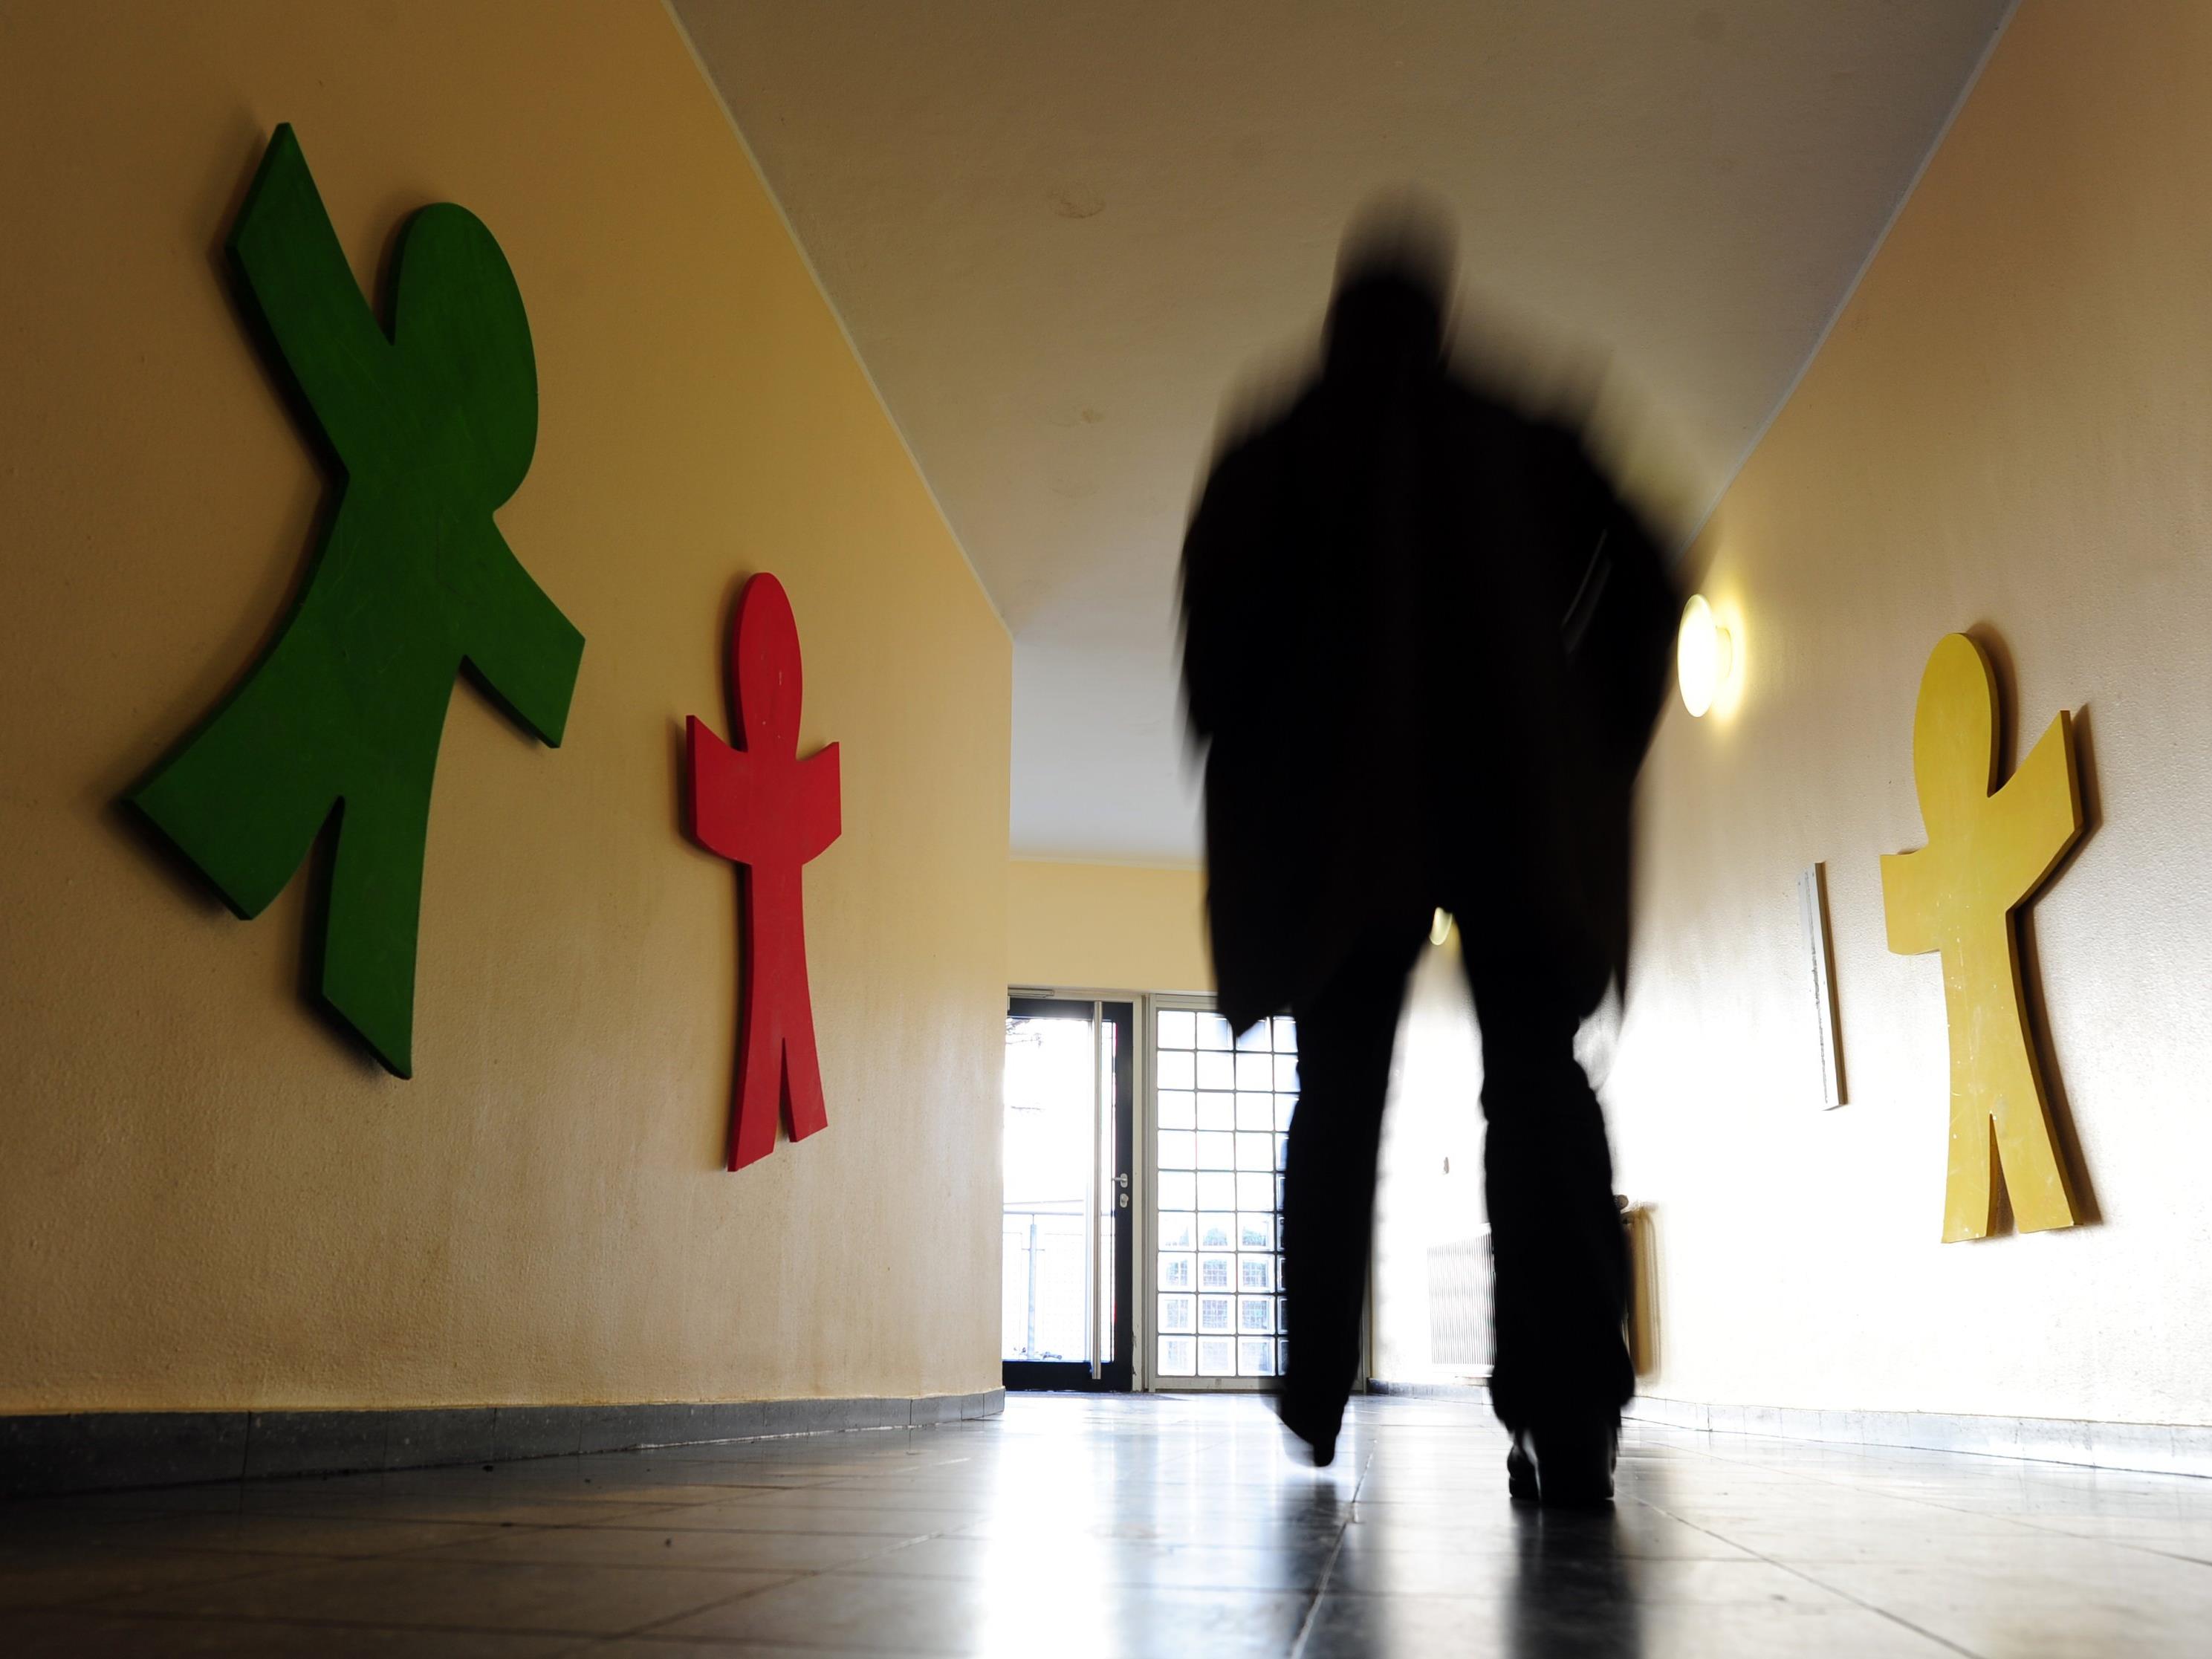 Täglich zwei Kinder zwangsweise in Wiener Erwachsenenpsychiatrie